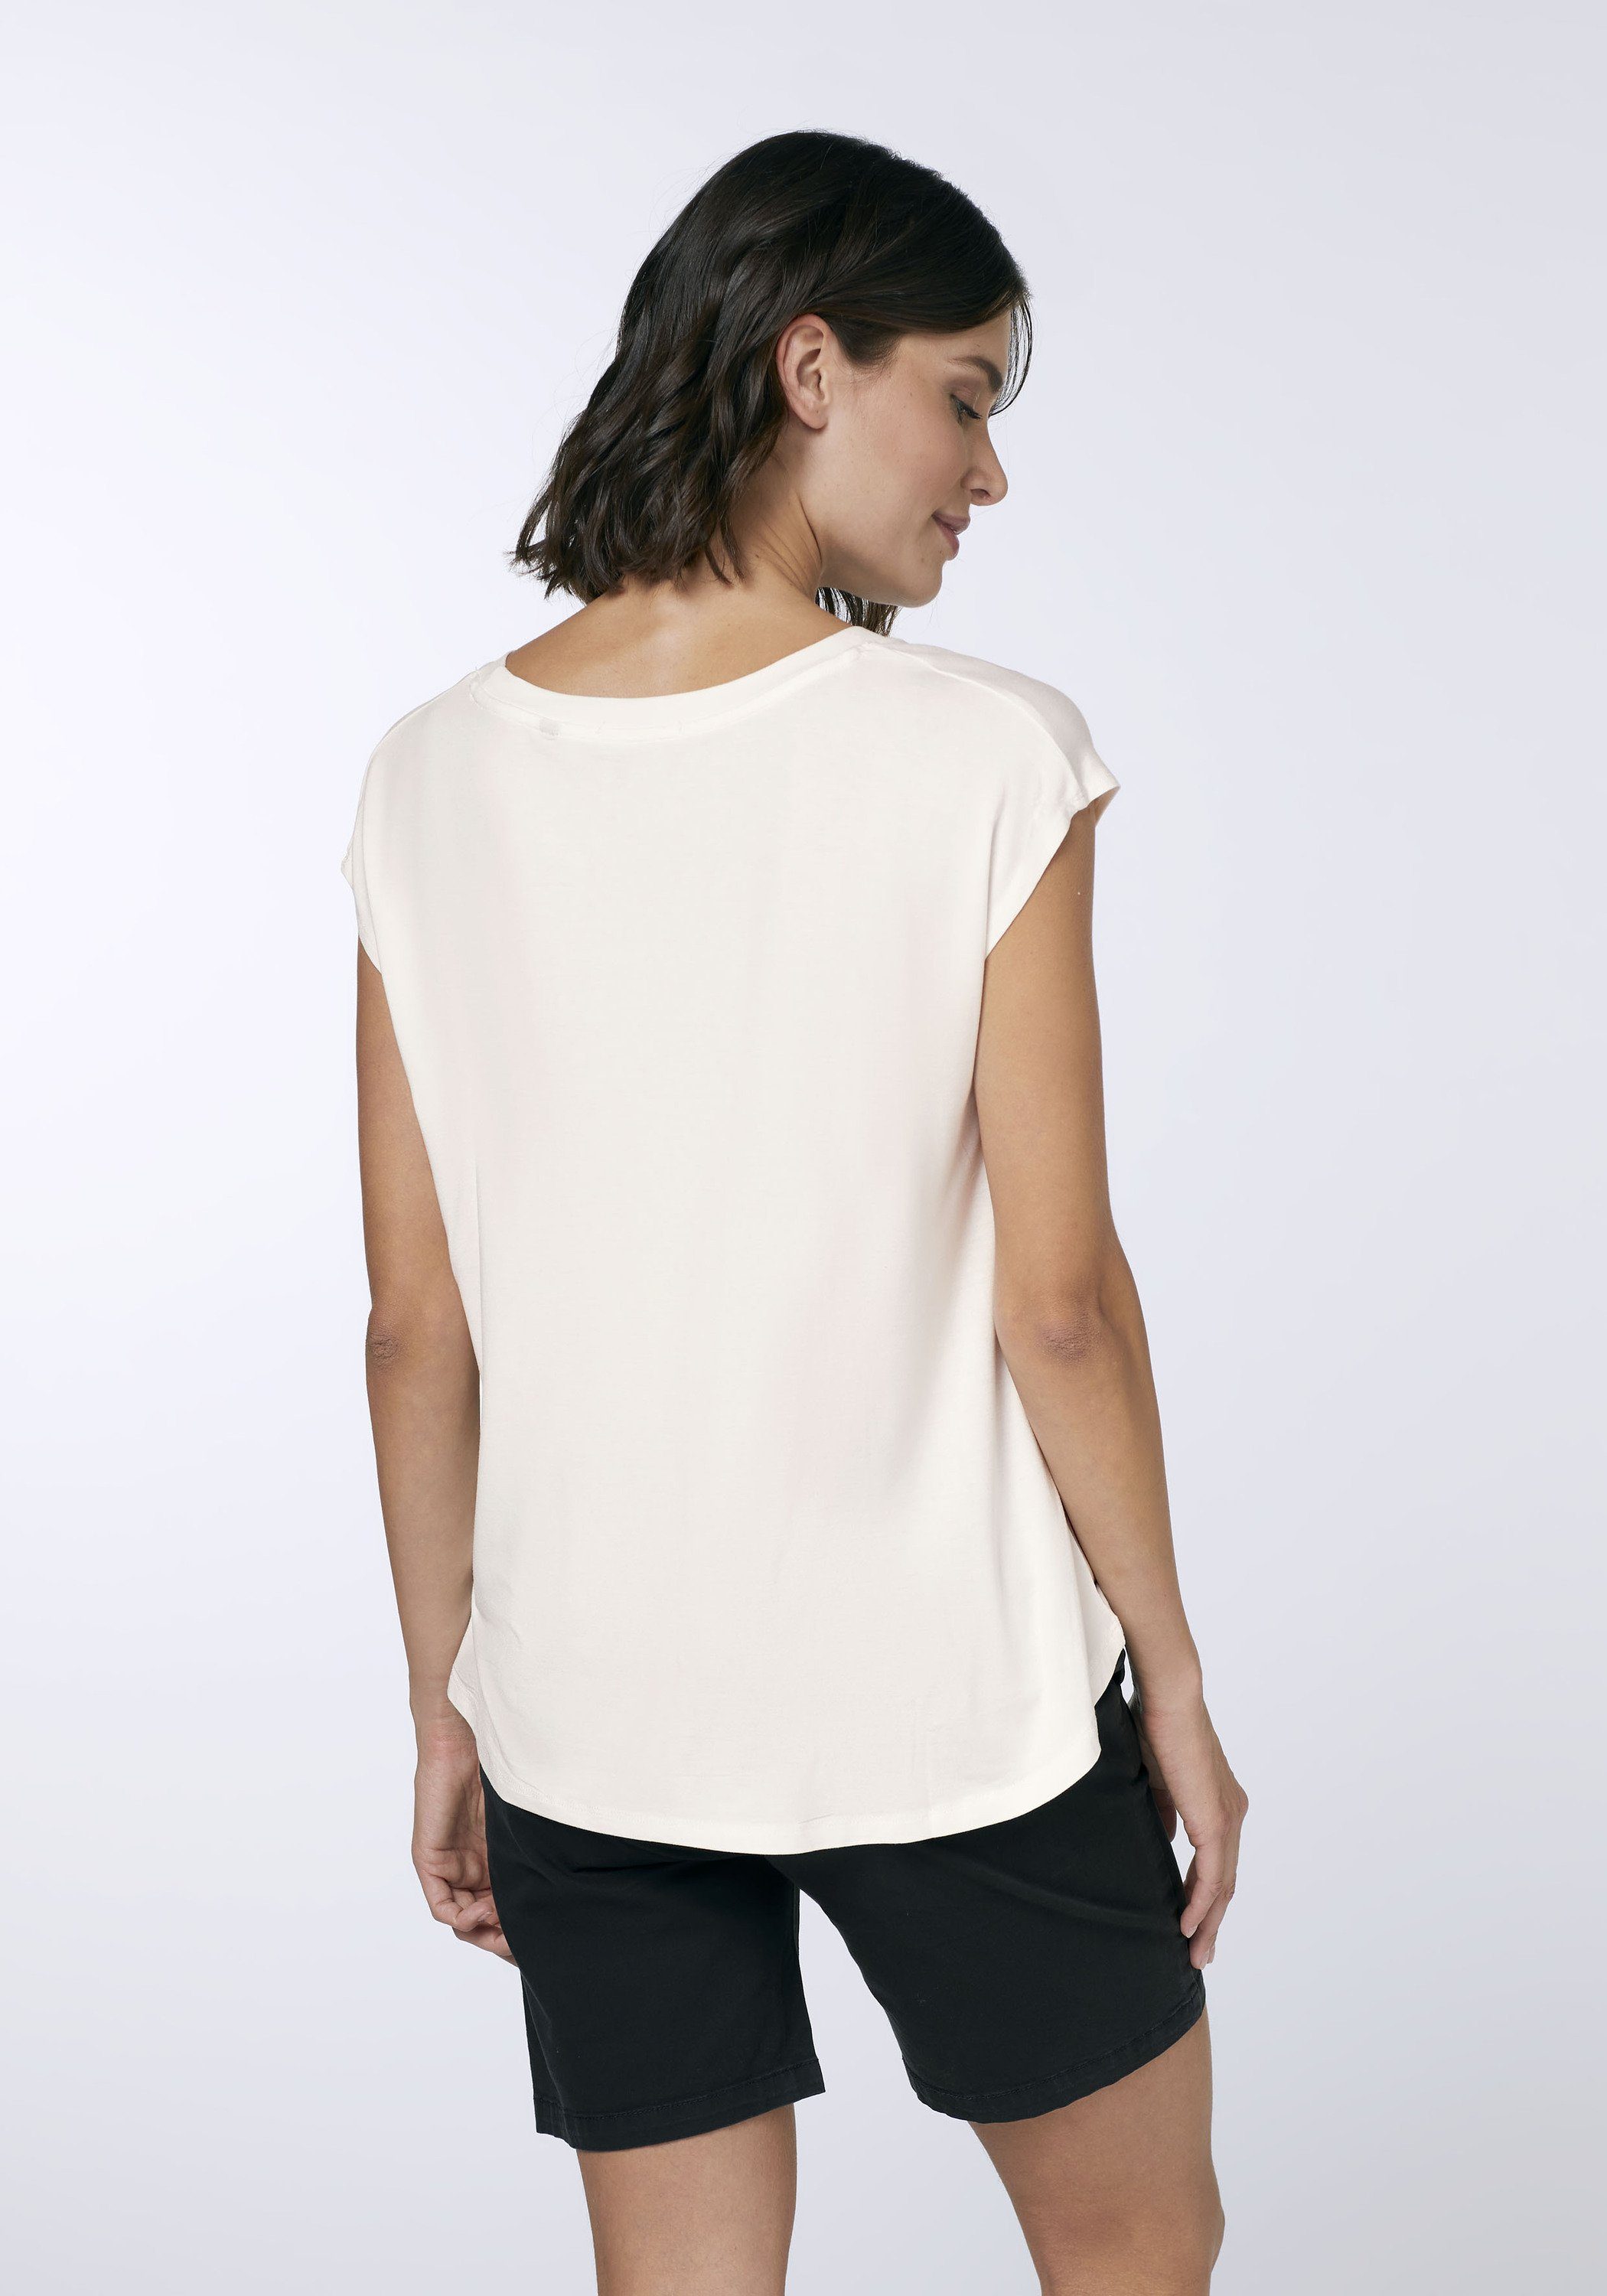 Chiemsee Print-Shirt T-Shirt White Star Viskose-Elasthanmix Labelprint aus mit 1